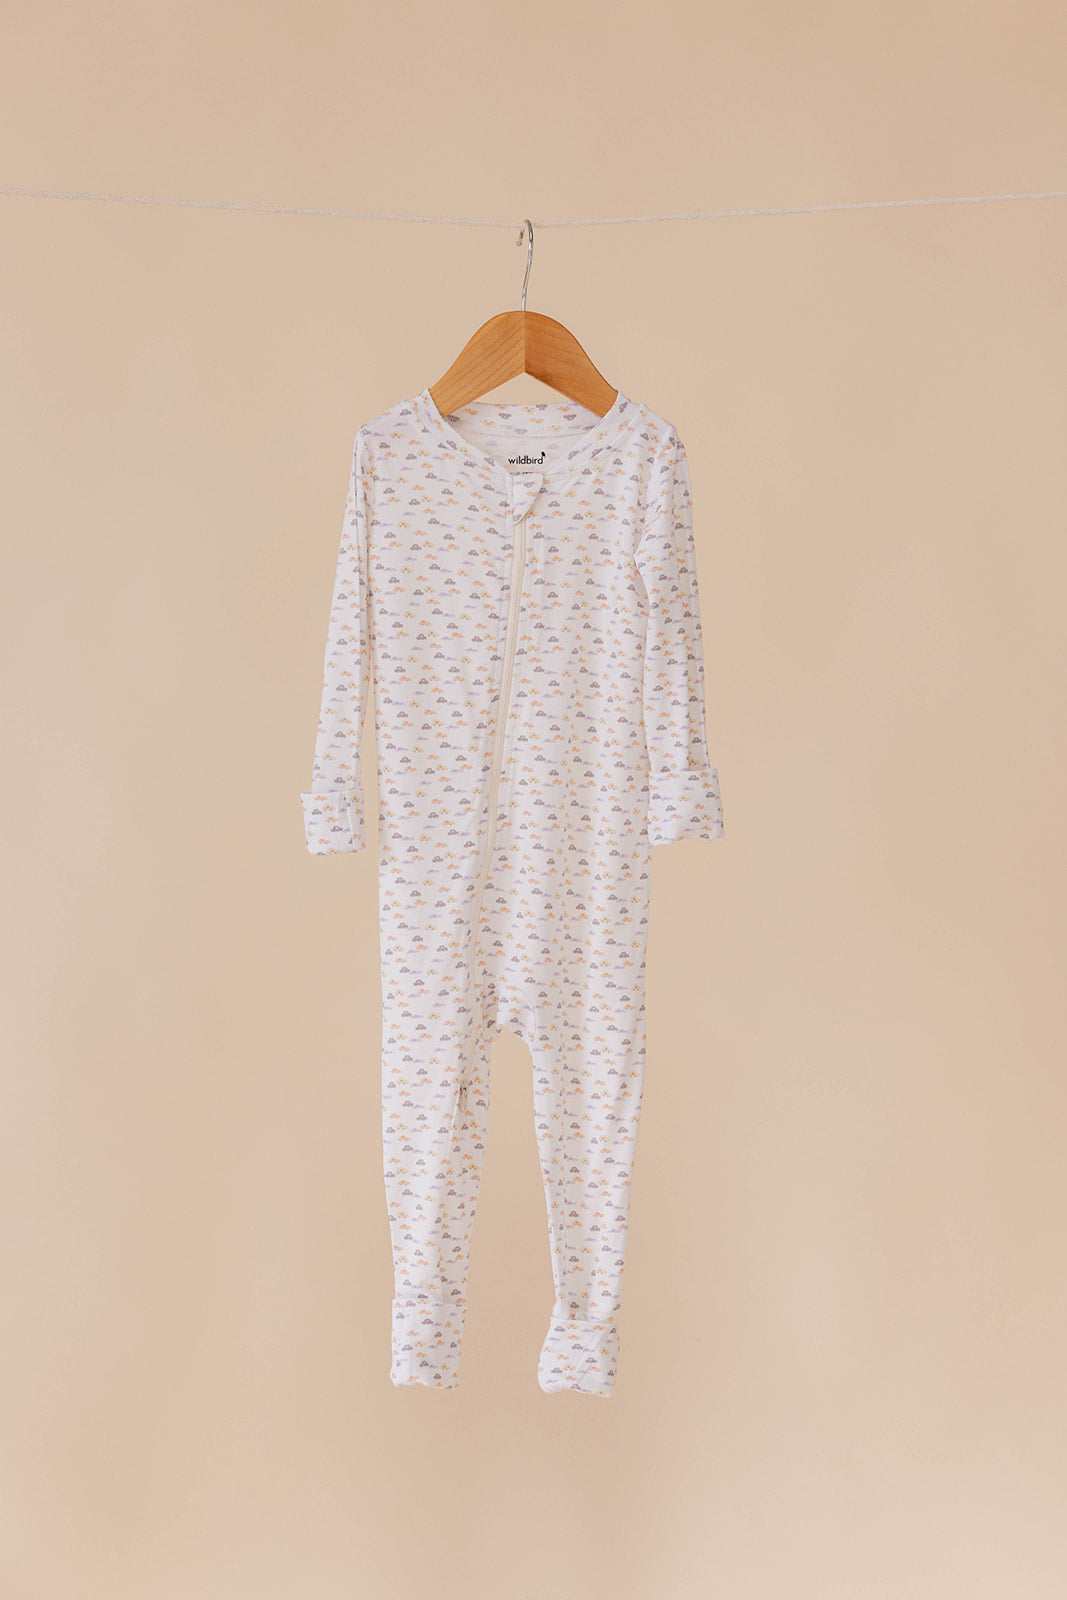 Hudson - CloudBlend™ Footless Pajamas